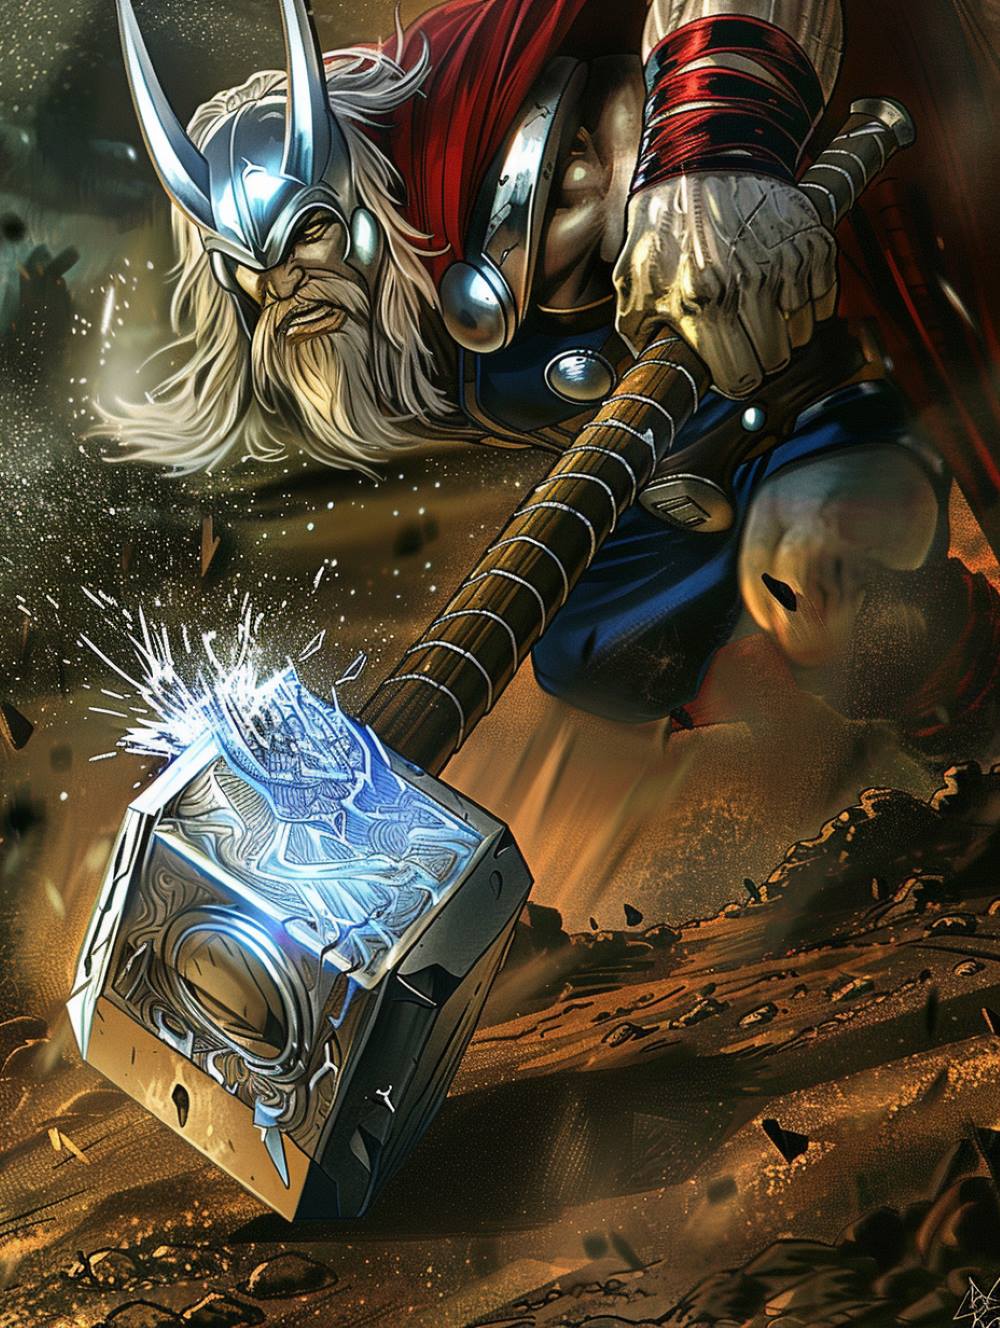 Thor is smashing Mjölnir on the ground to break it into pieces